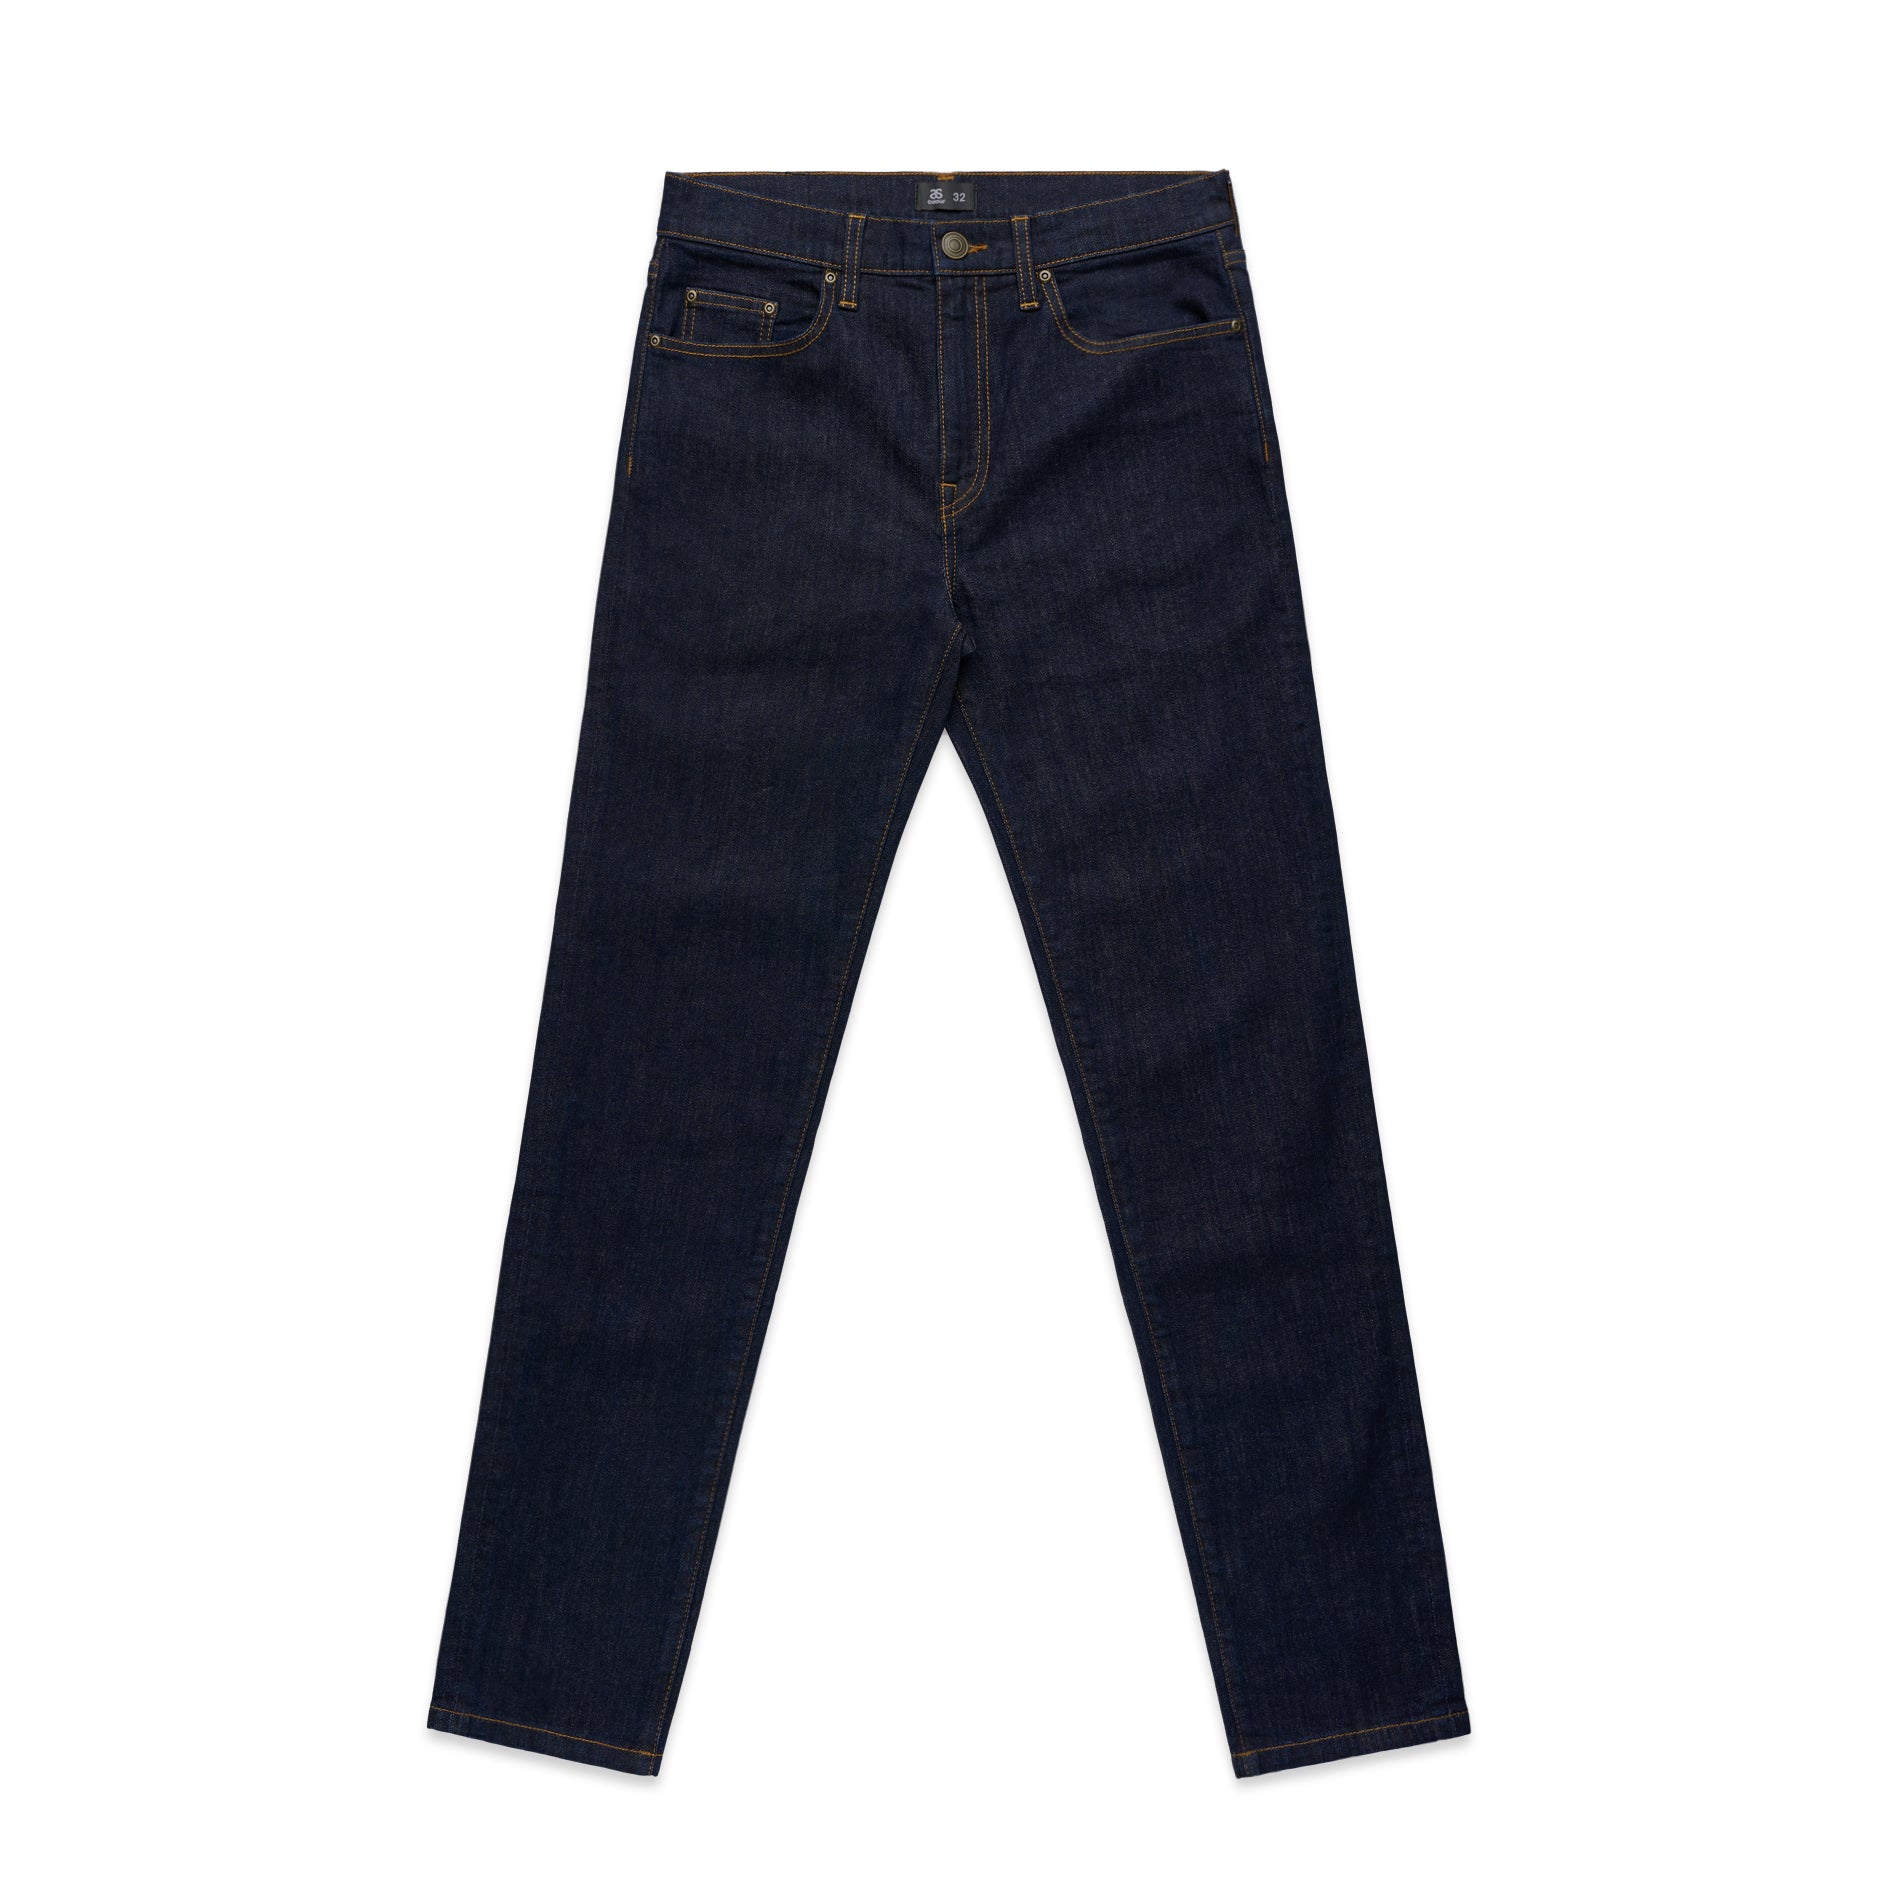 Standard Cut On Denim Jeans - 5801